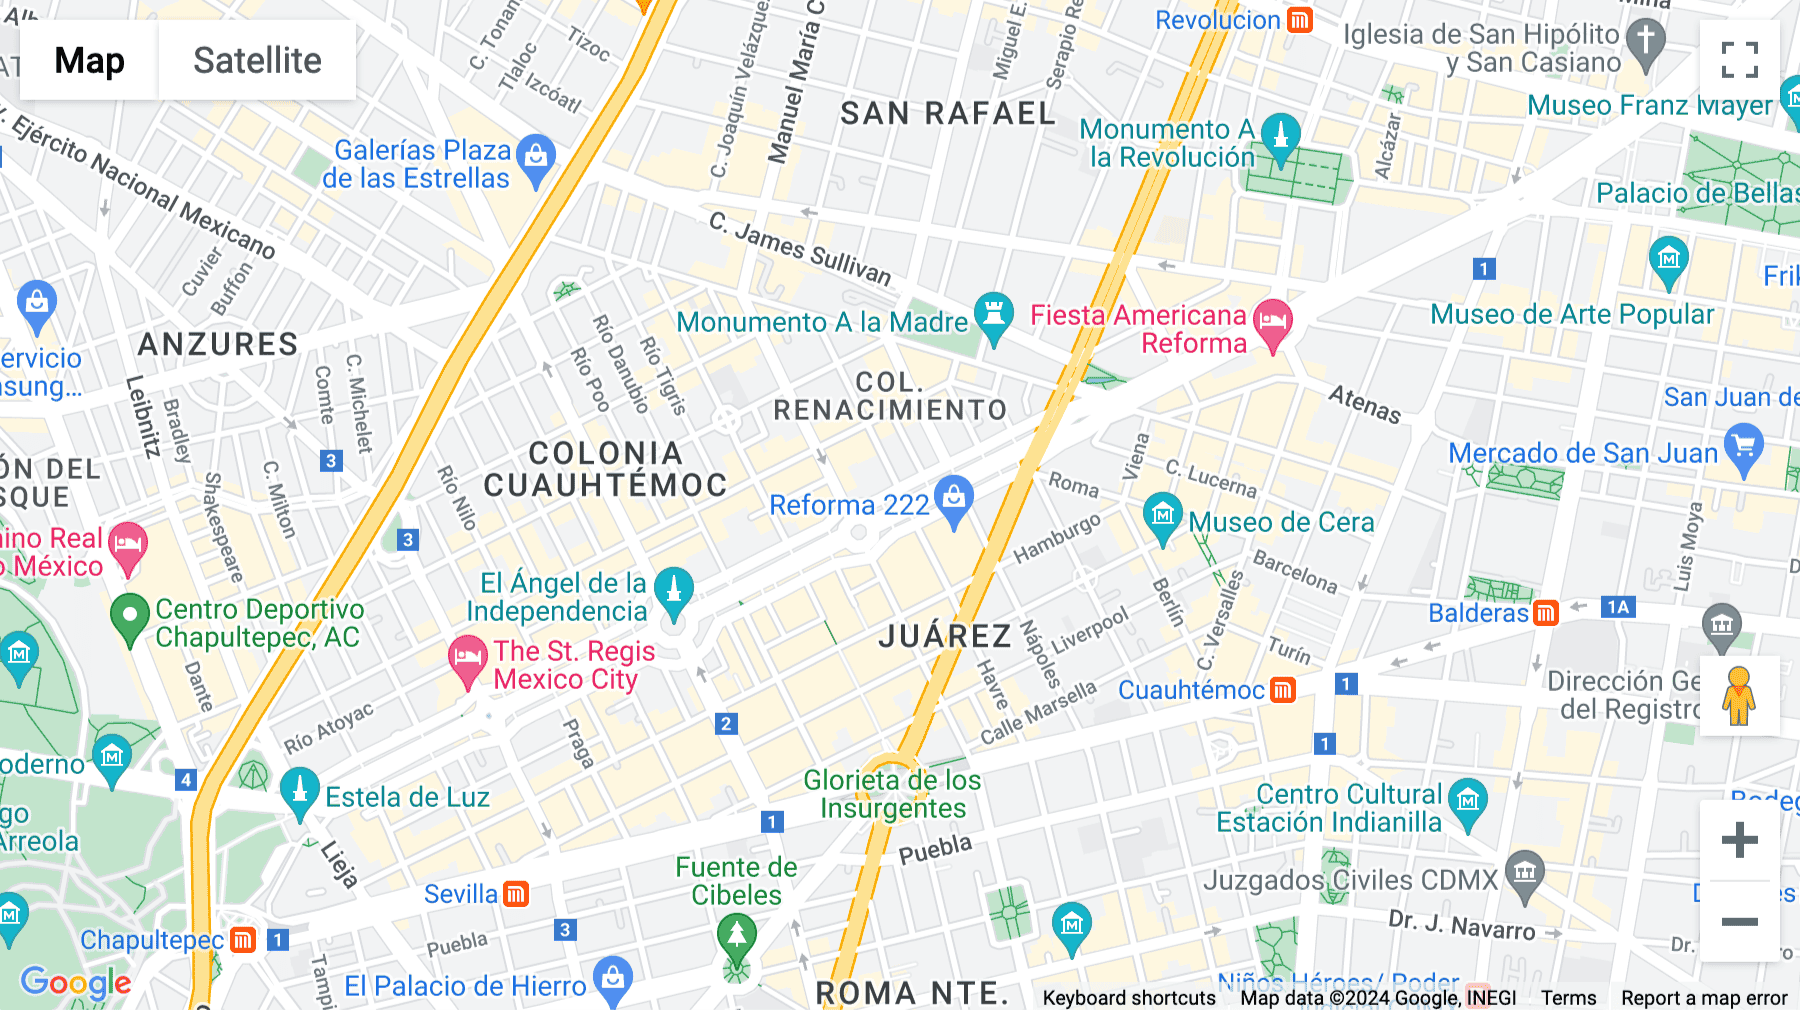 Click for interative map of Paseo de la Reforma 180, Juarez, Reforma 180, Mexico City